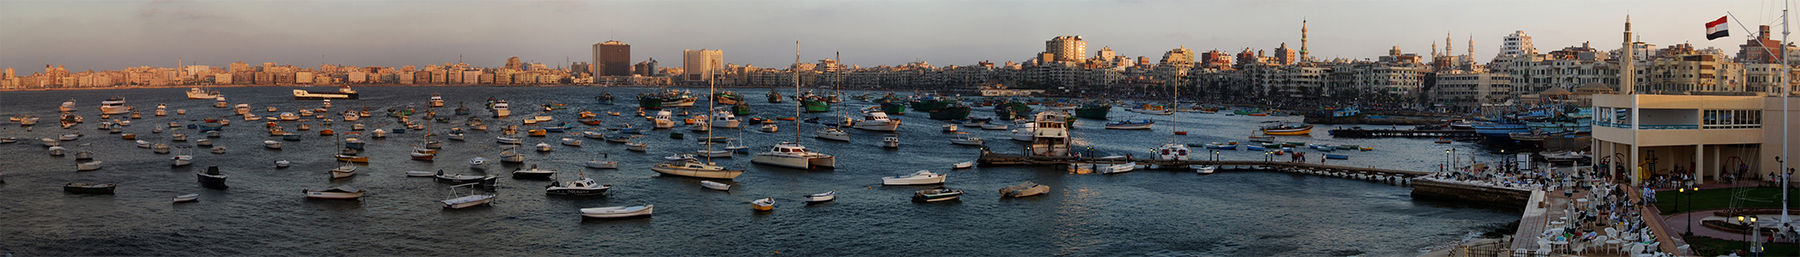 Alexandria harbour banner.jpg